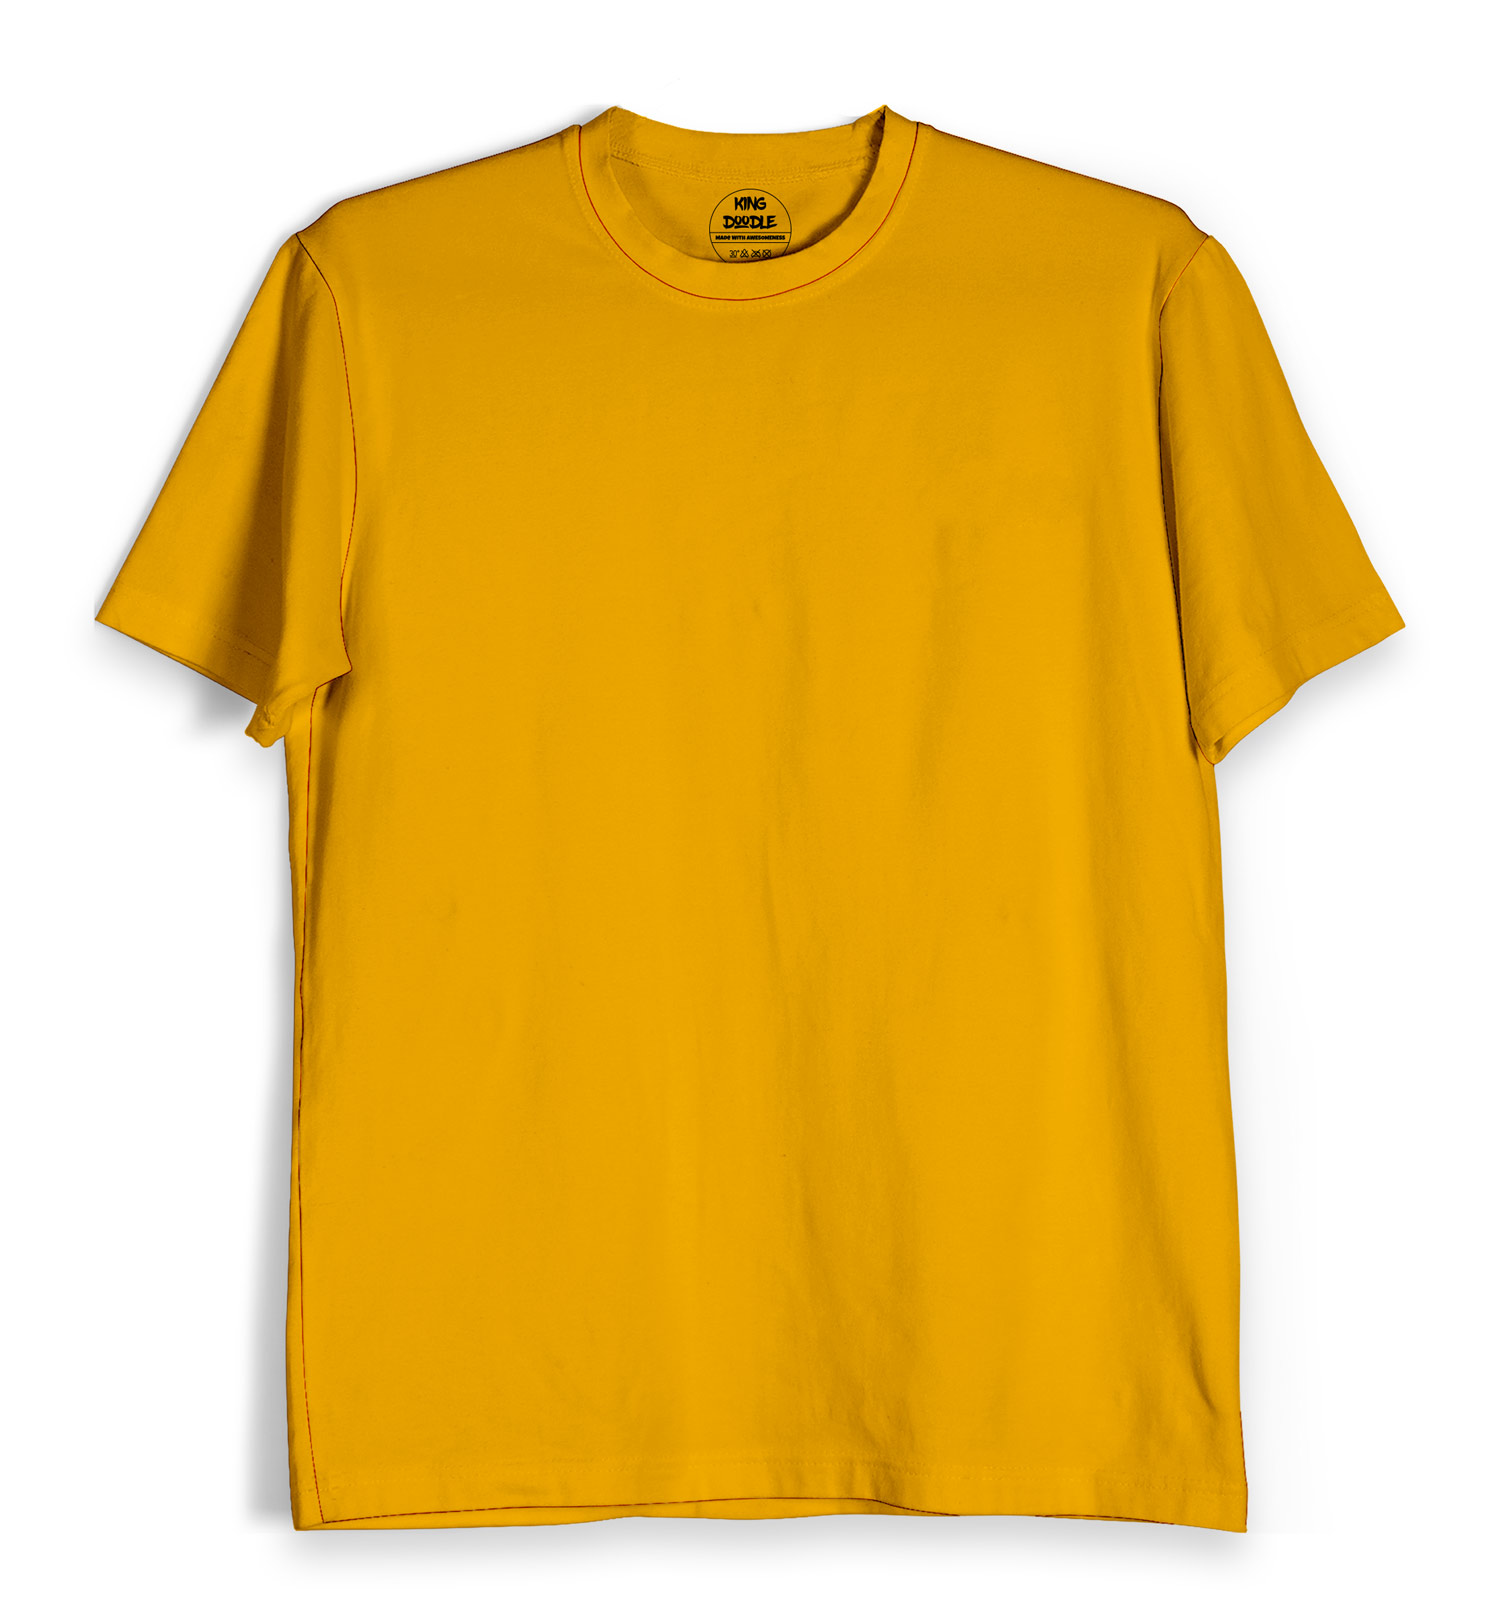 Buy TShirt : Golden Yellow T-shirt | King Doodle